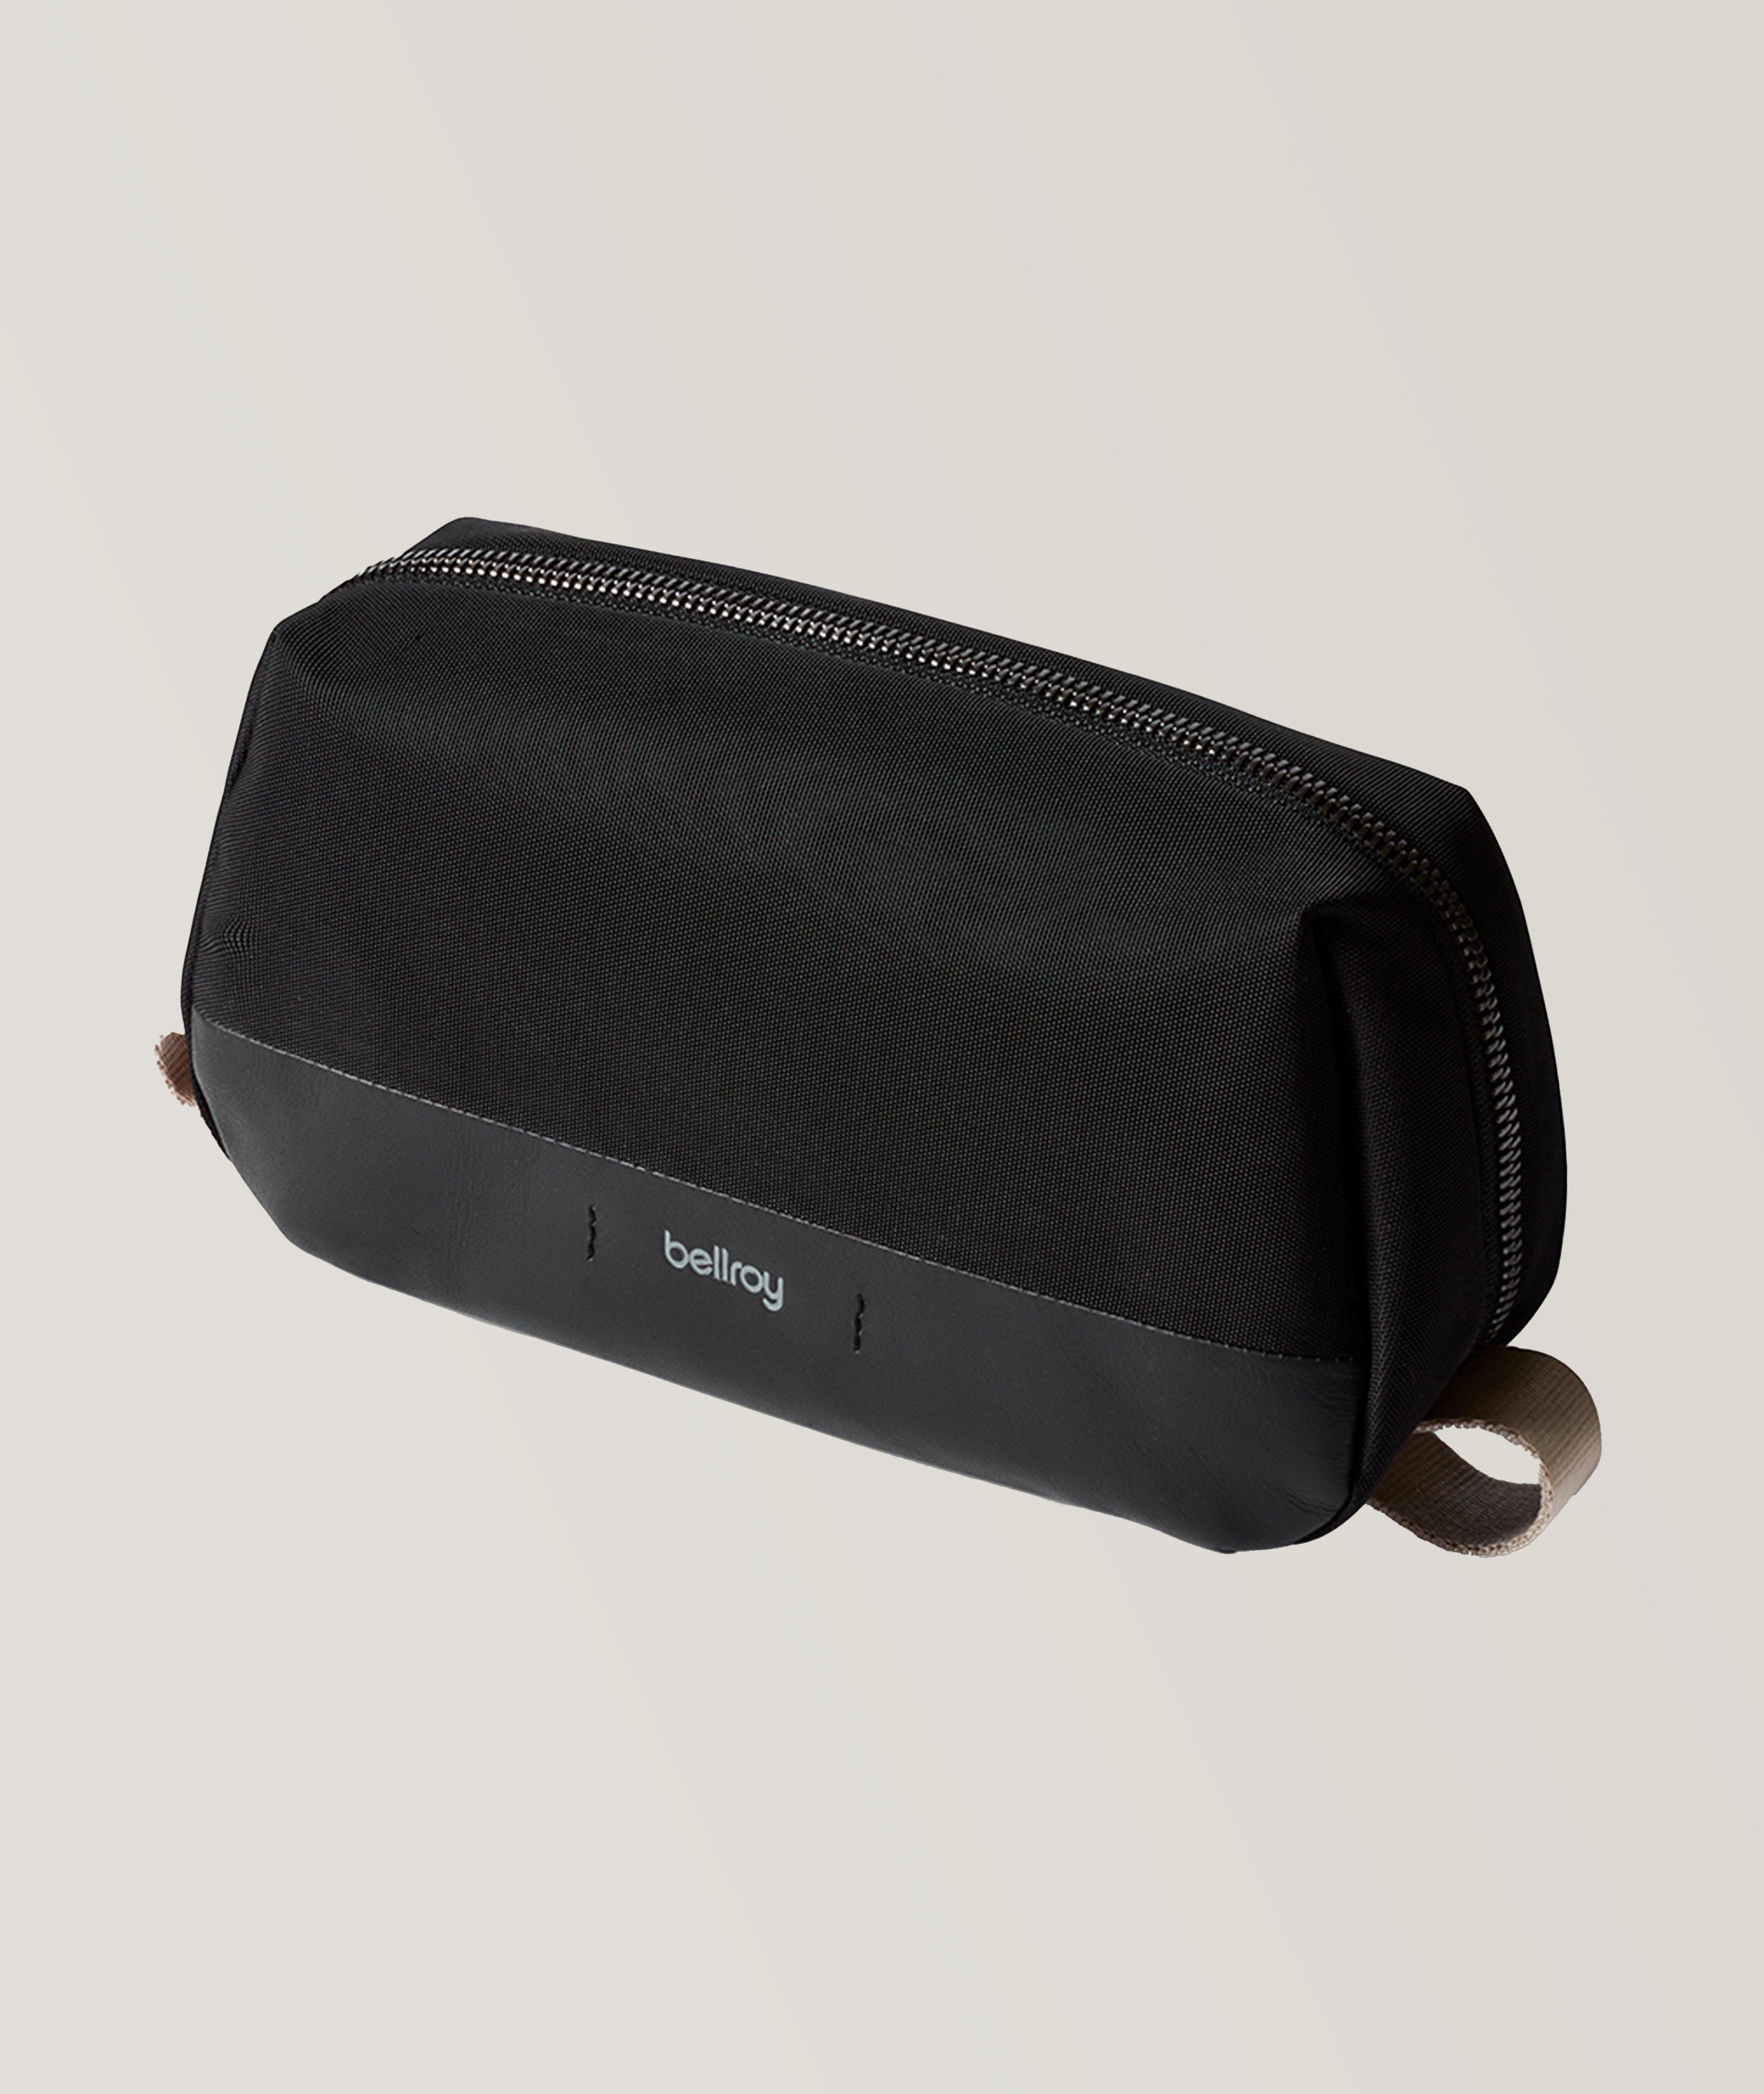 Dopp Premium Leather Travel Case image 0